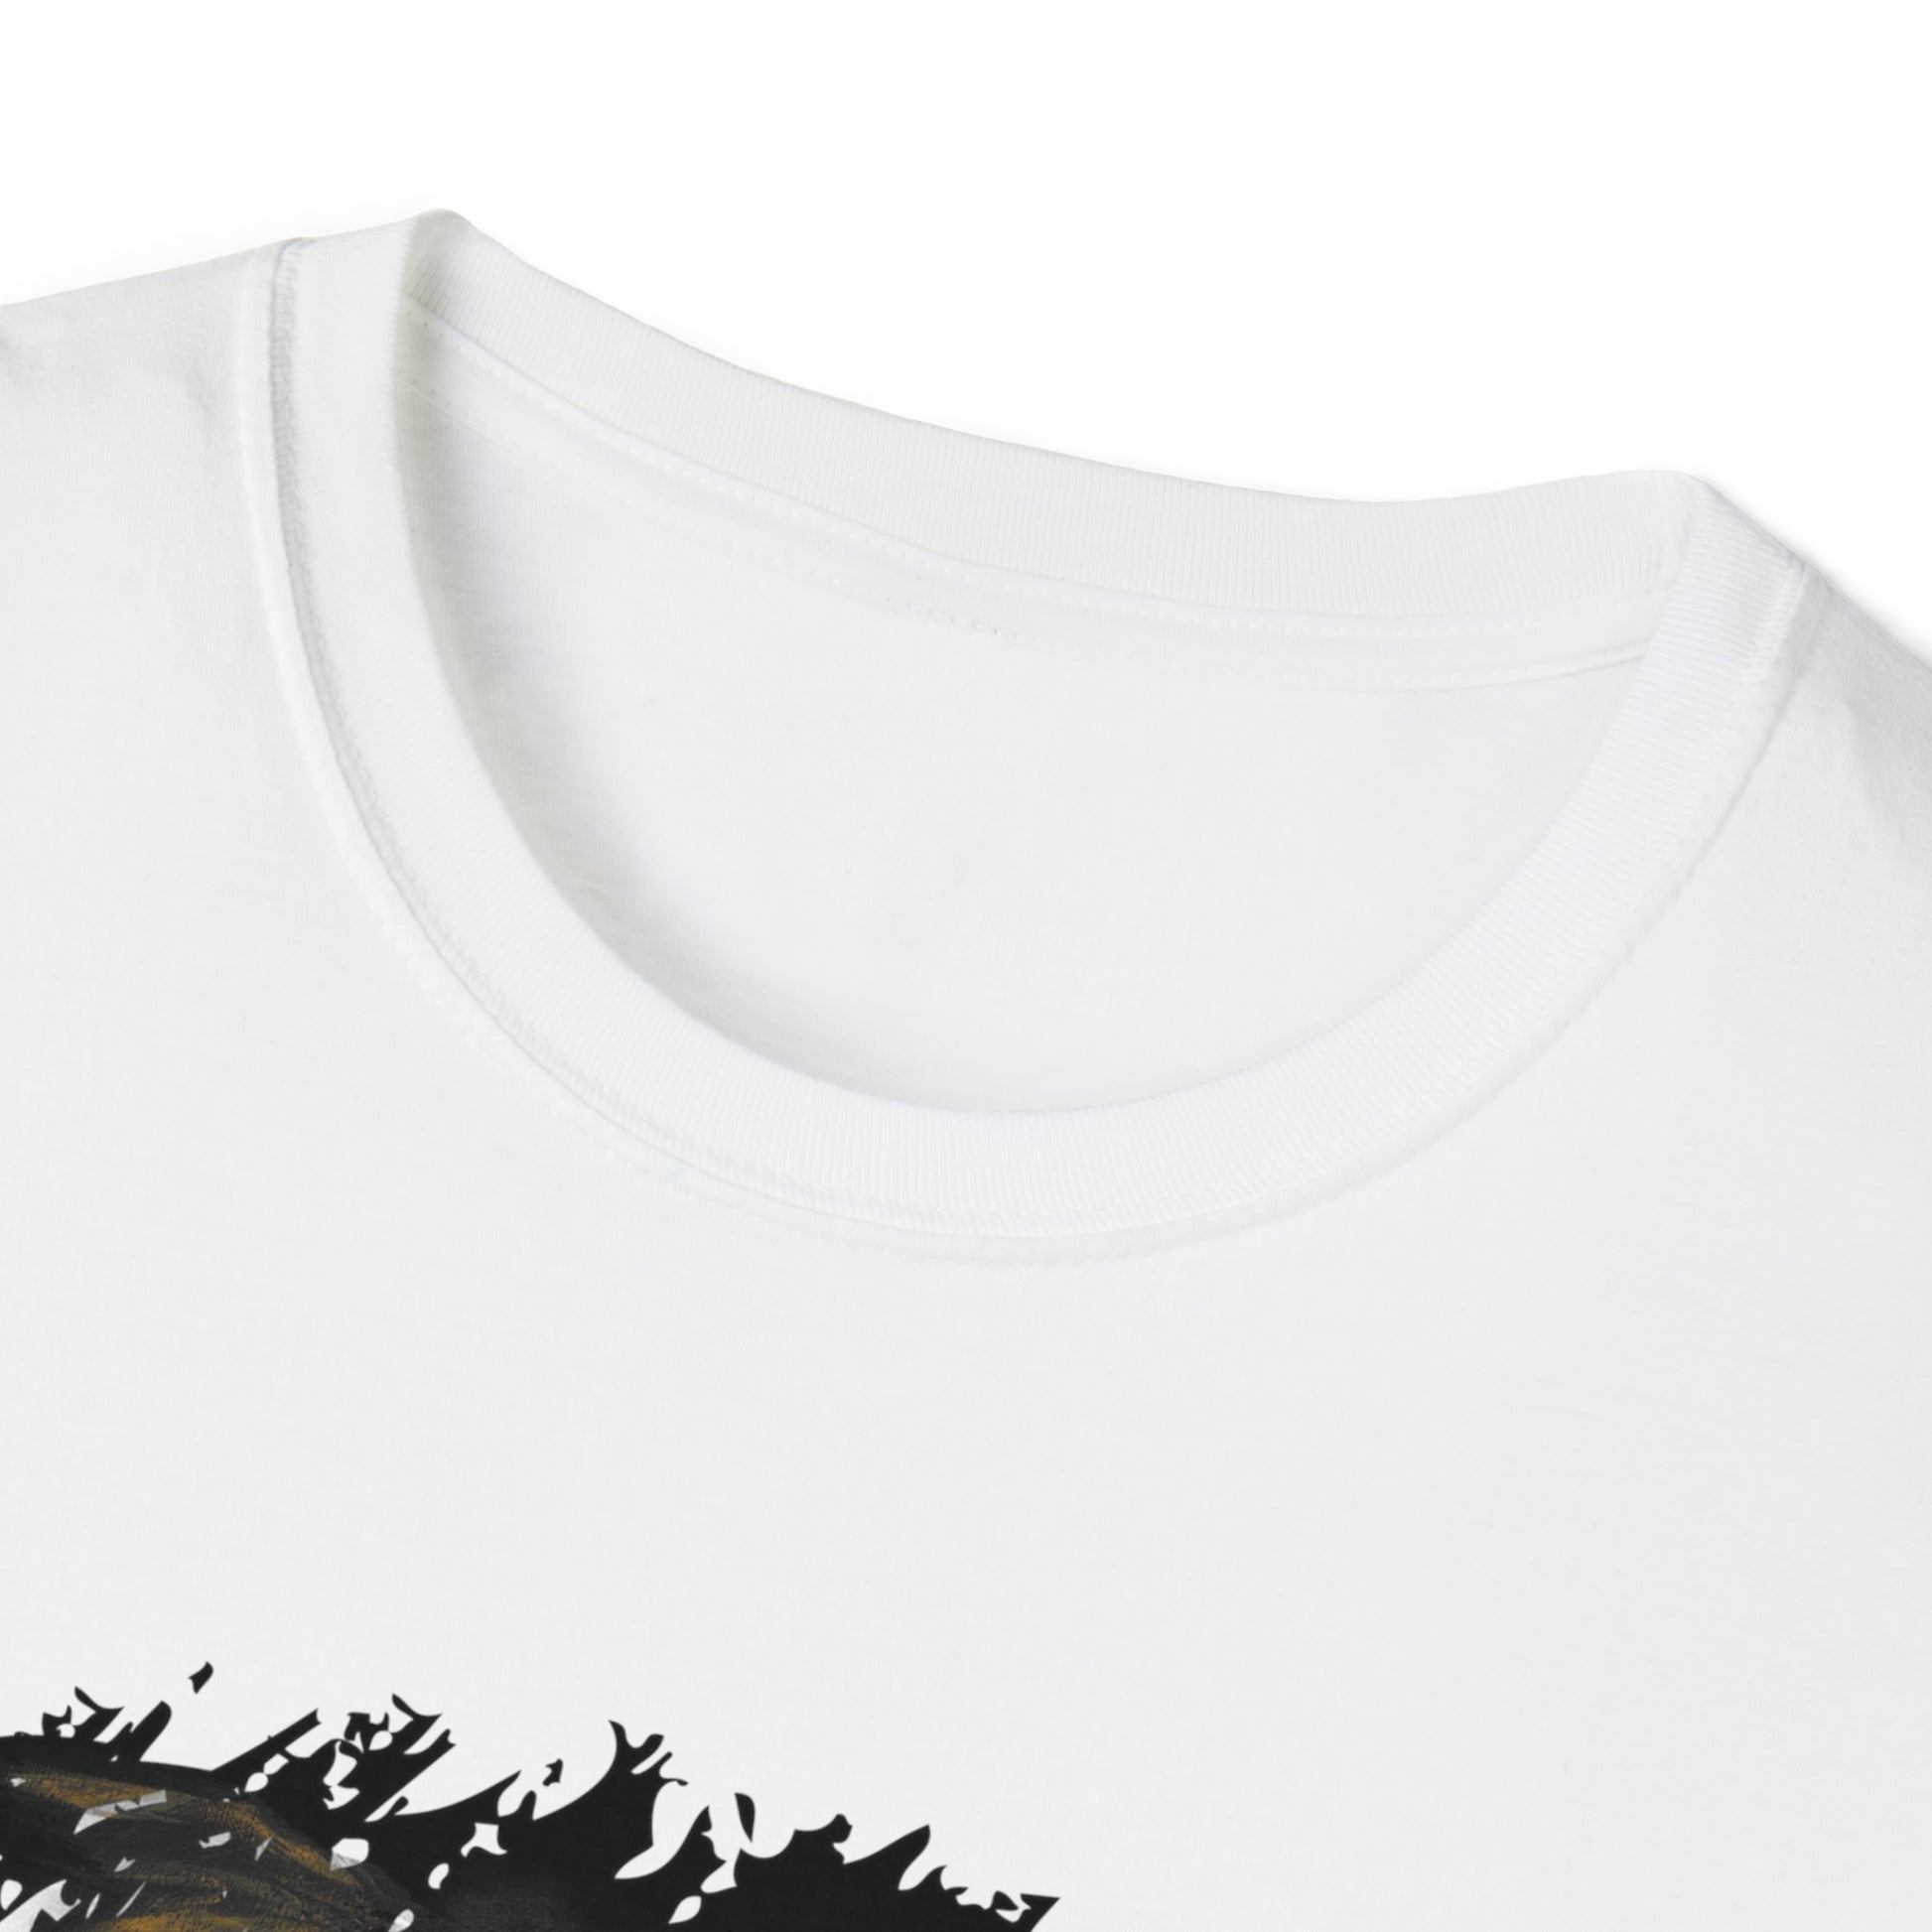 Lion  Art Unisex Softstyle T-Shirt